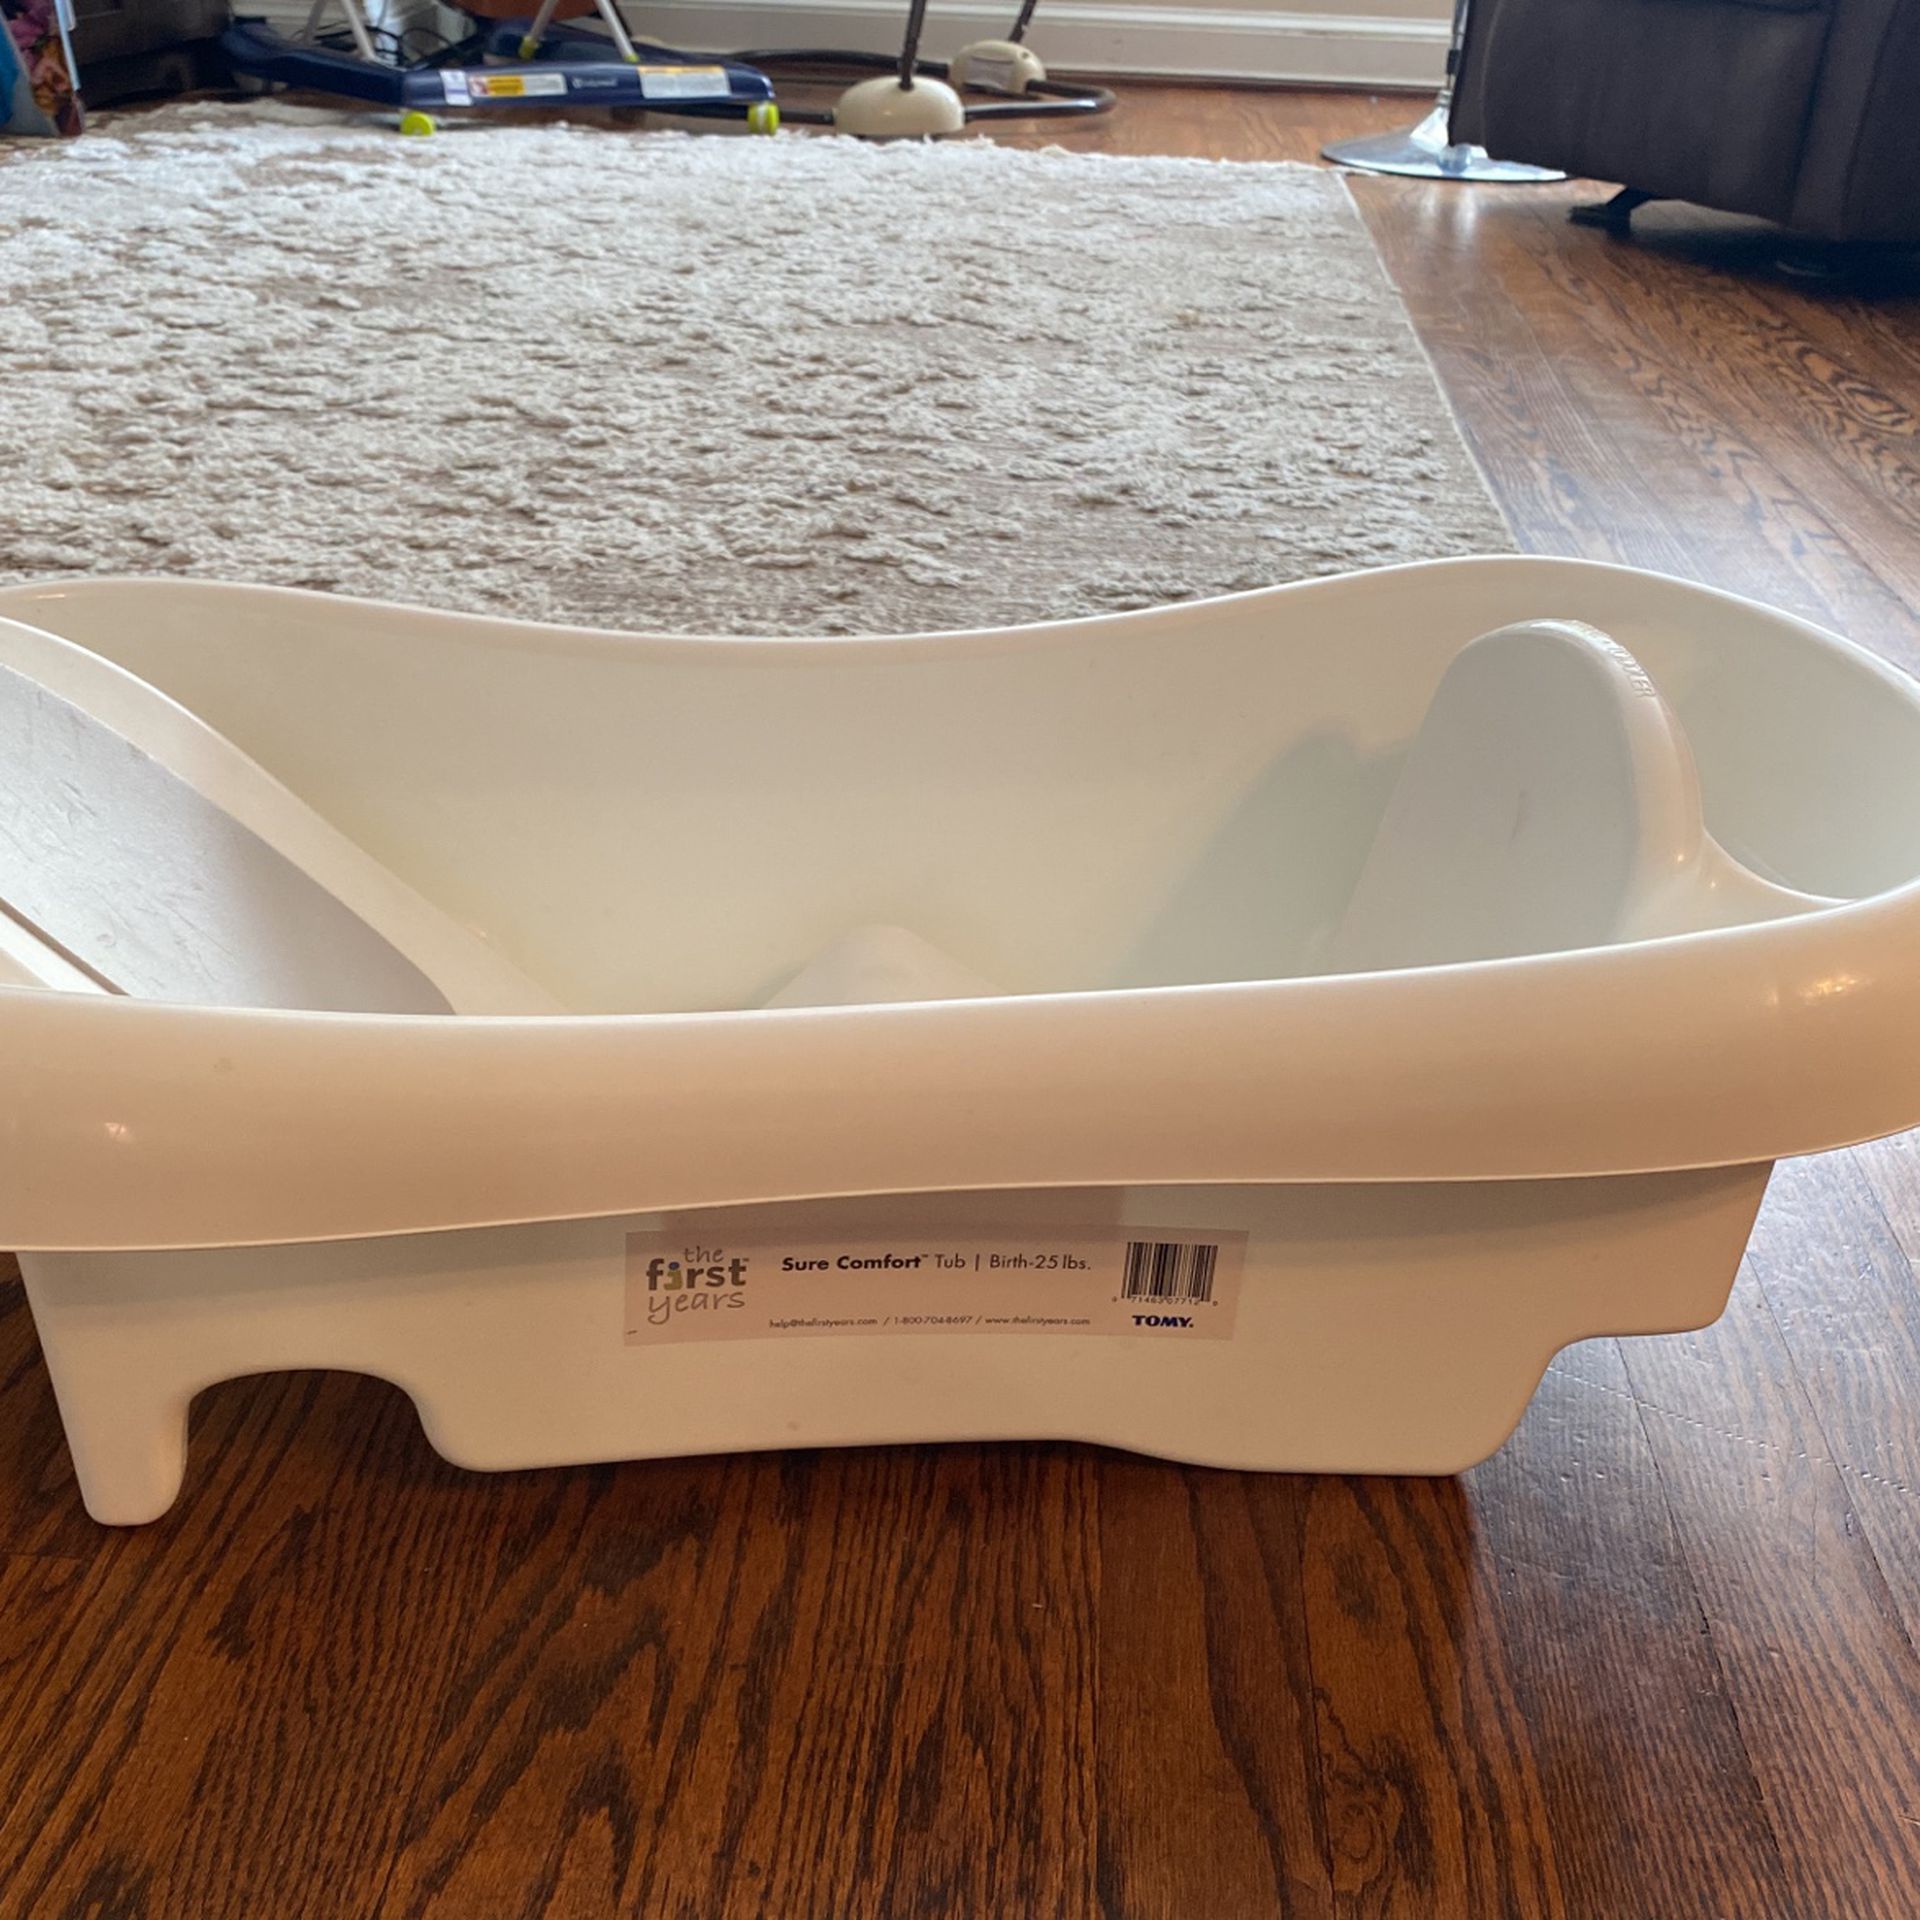 Sure Comfort Bath Tub 